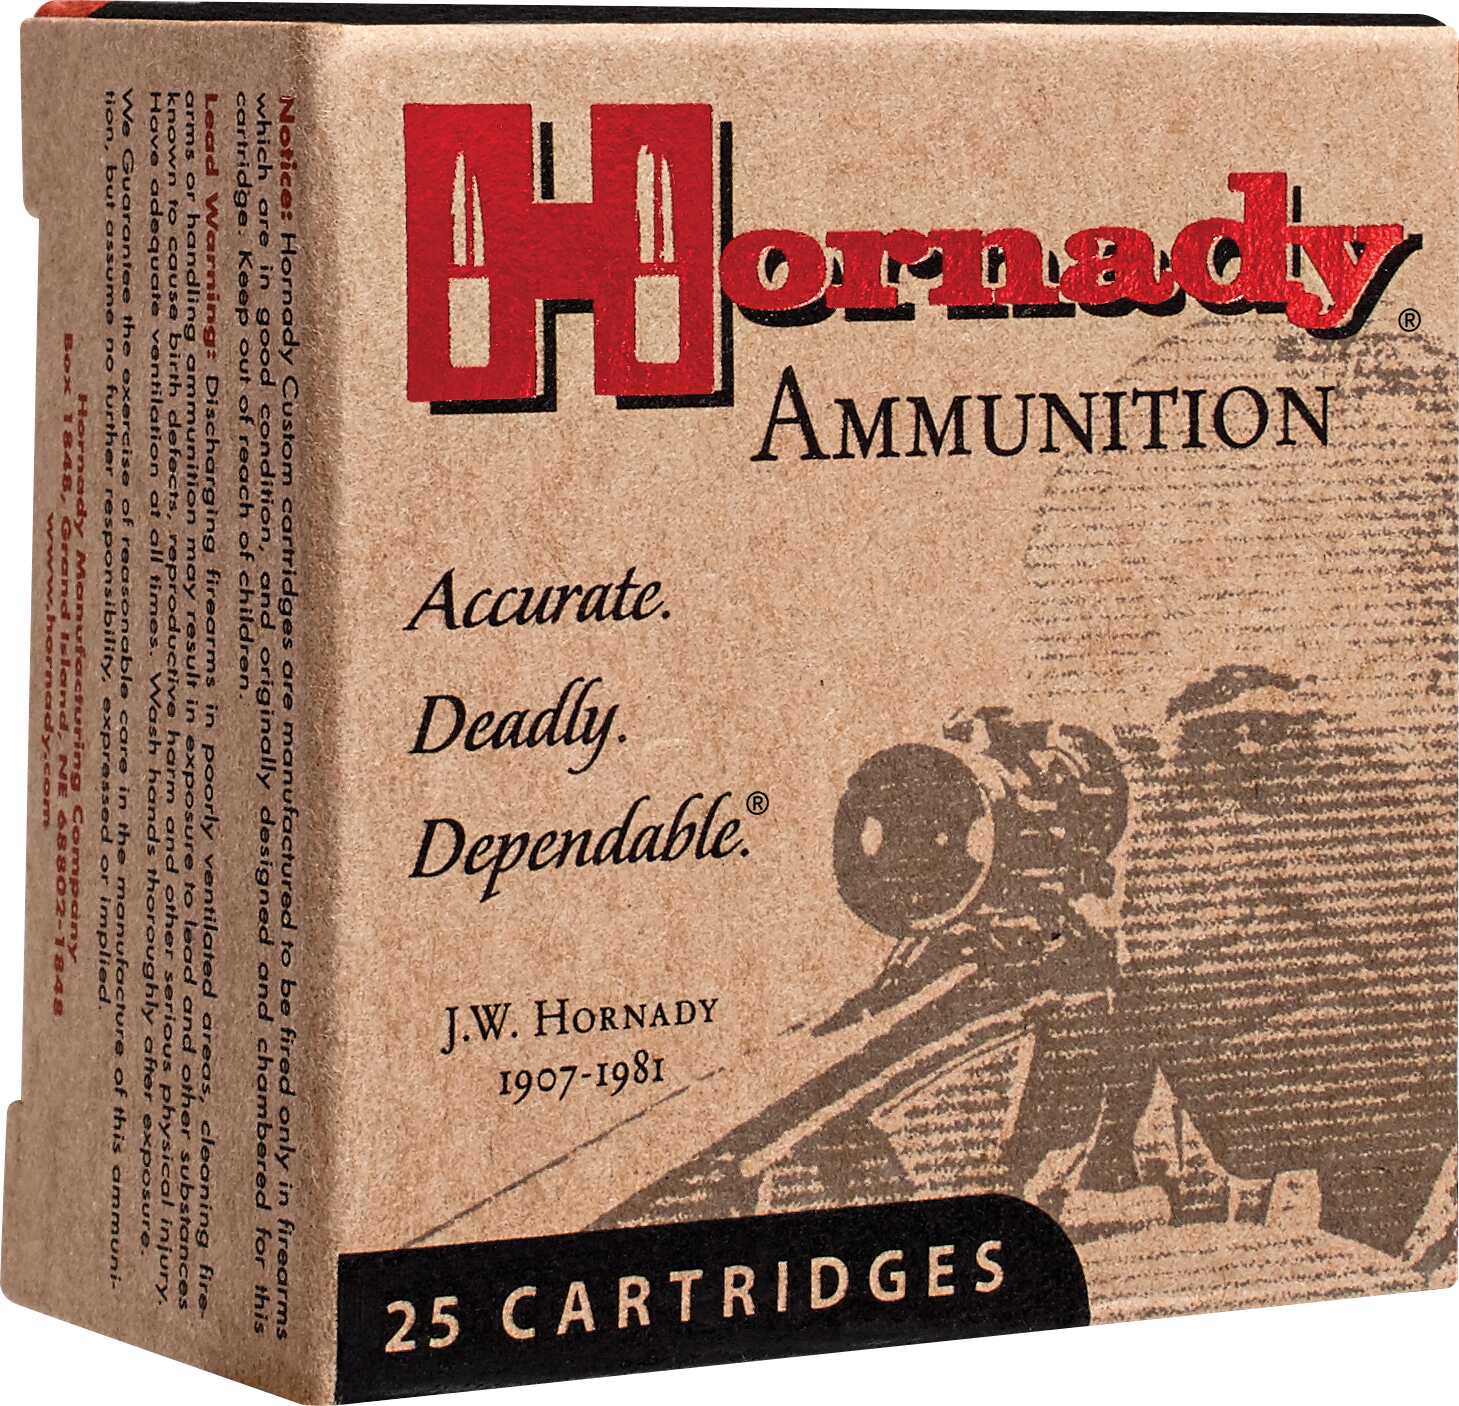 44 Special 180 Grain Hollow Point 20 Rounds Hornady Ammunition